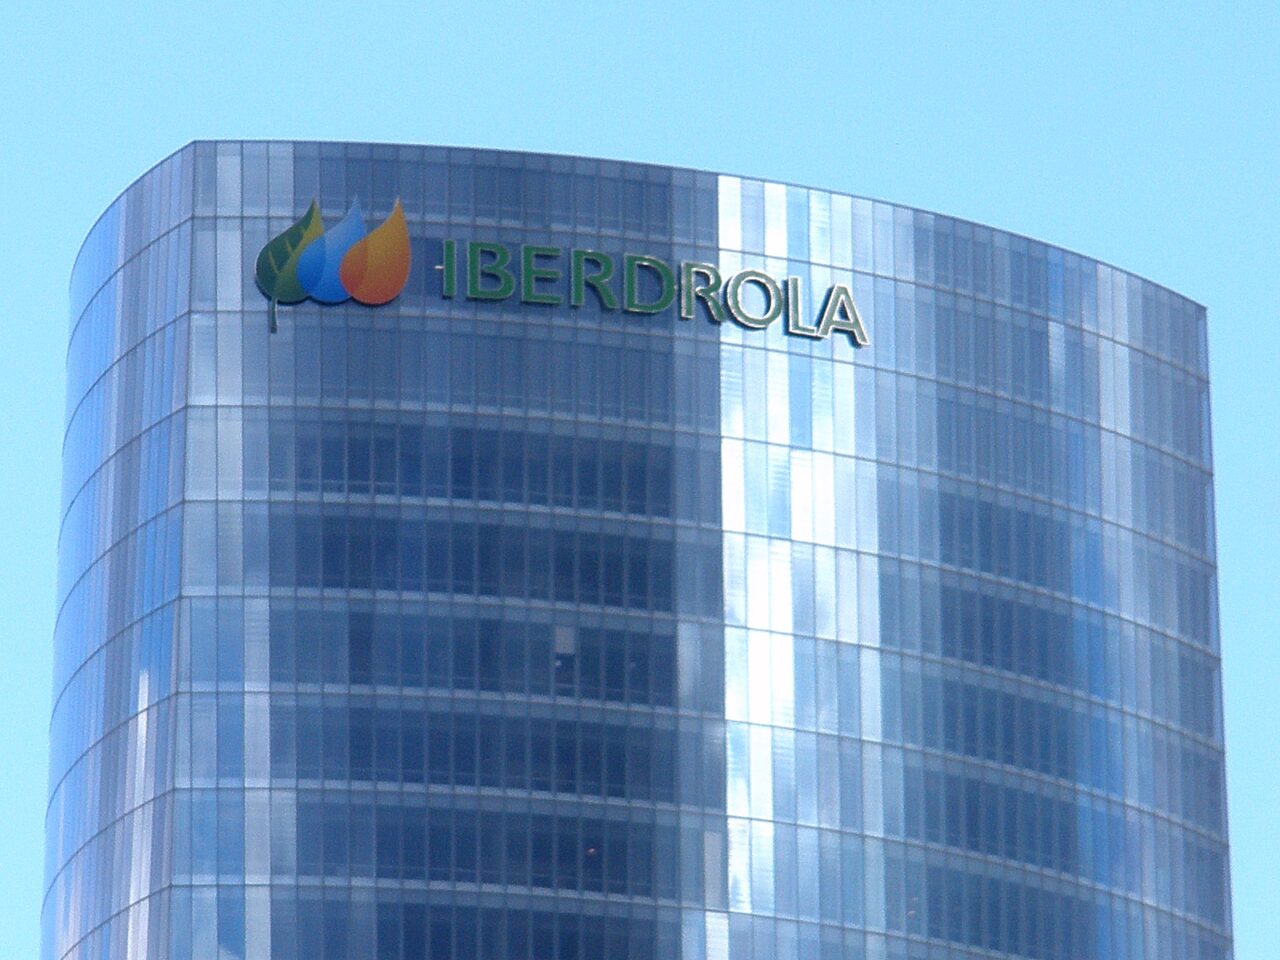 Iberdrola Terminates $8 Billion Deal to Acquire New Mexico Utility